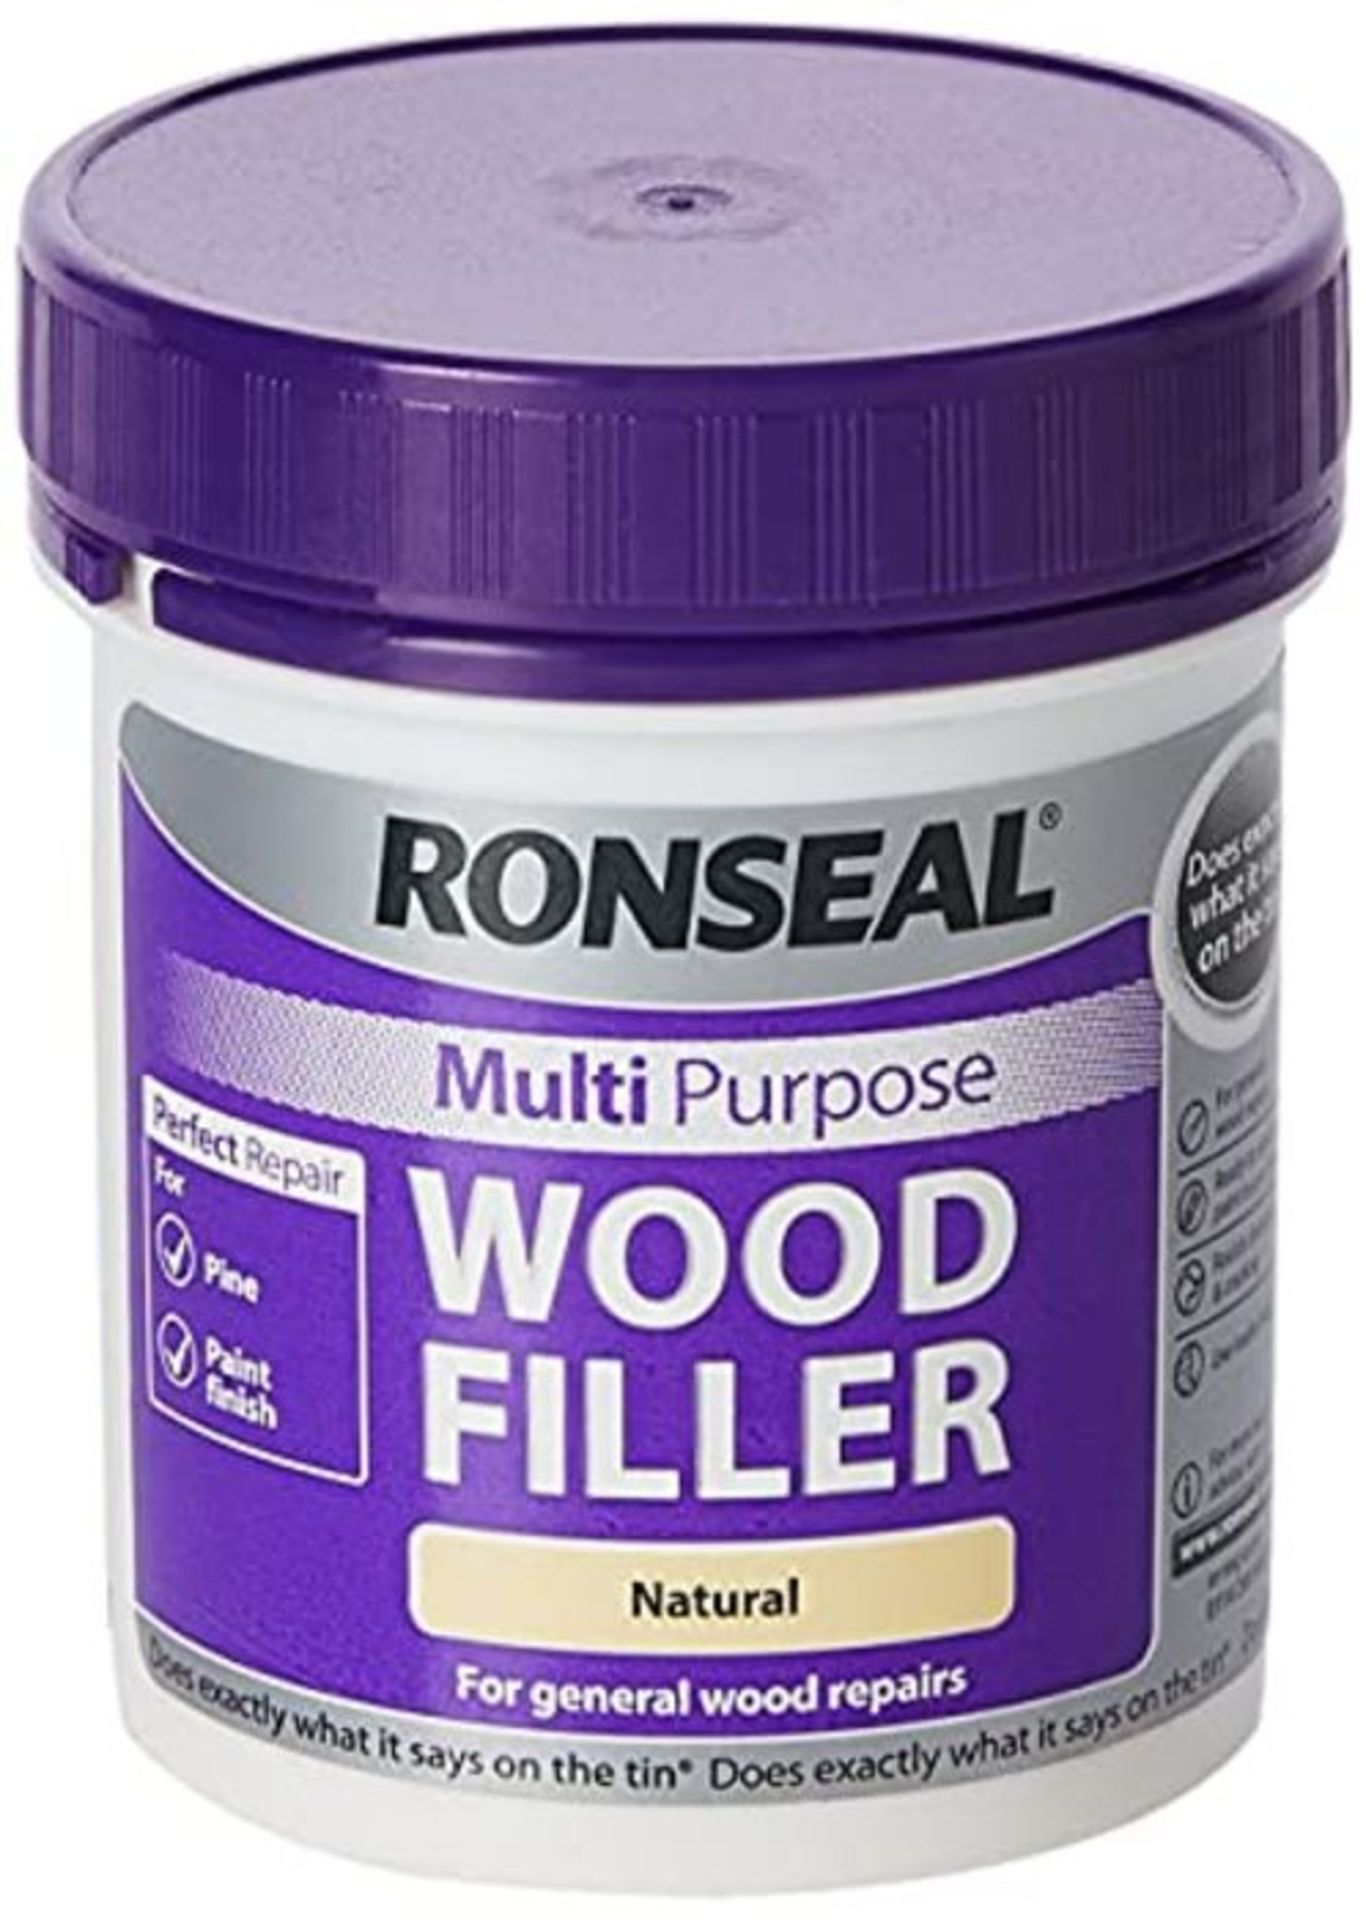 RONSEAL 34735 Ronseal Multi-Purpose Wood Filler - Natural, Purple, 250g